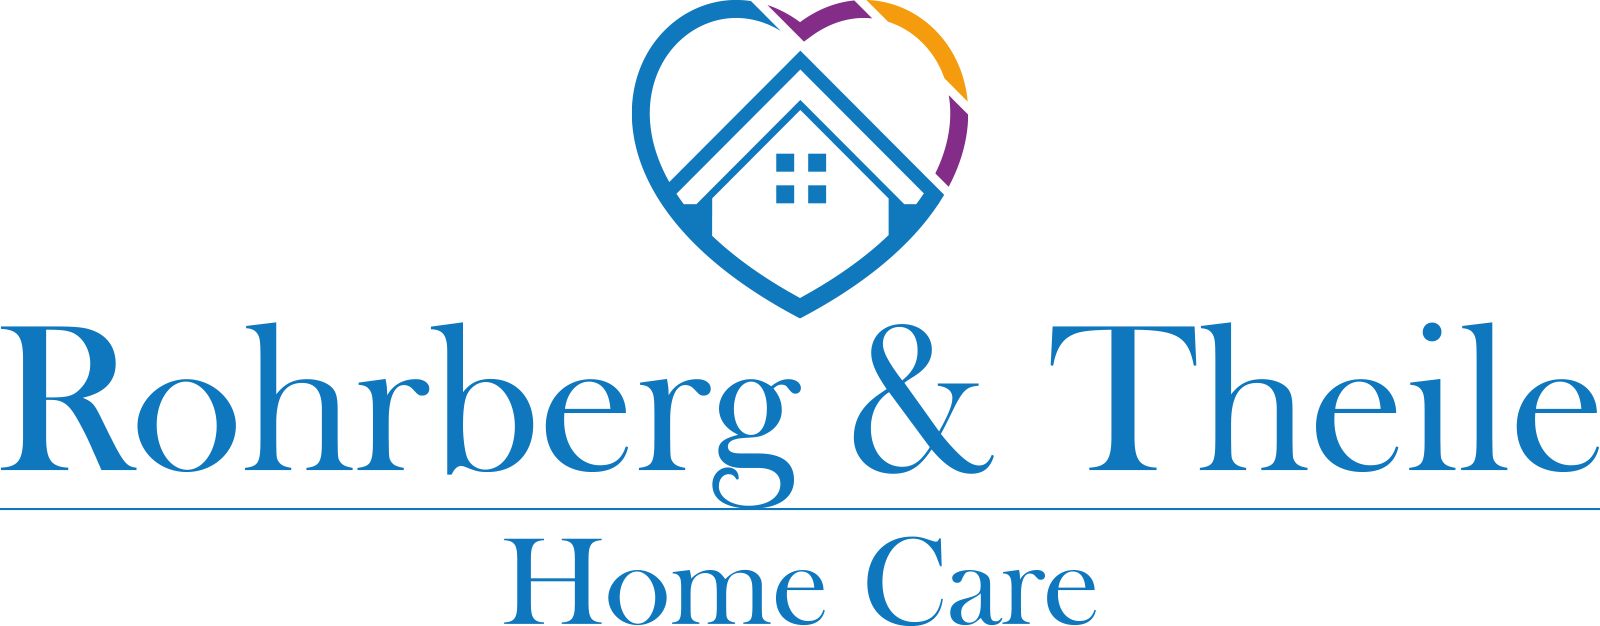 Logo: Rohrberg & Theile Home Care GbR Ambulanter Pflegedienst